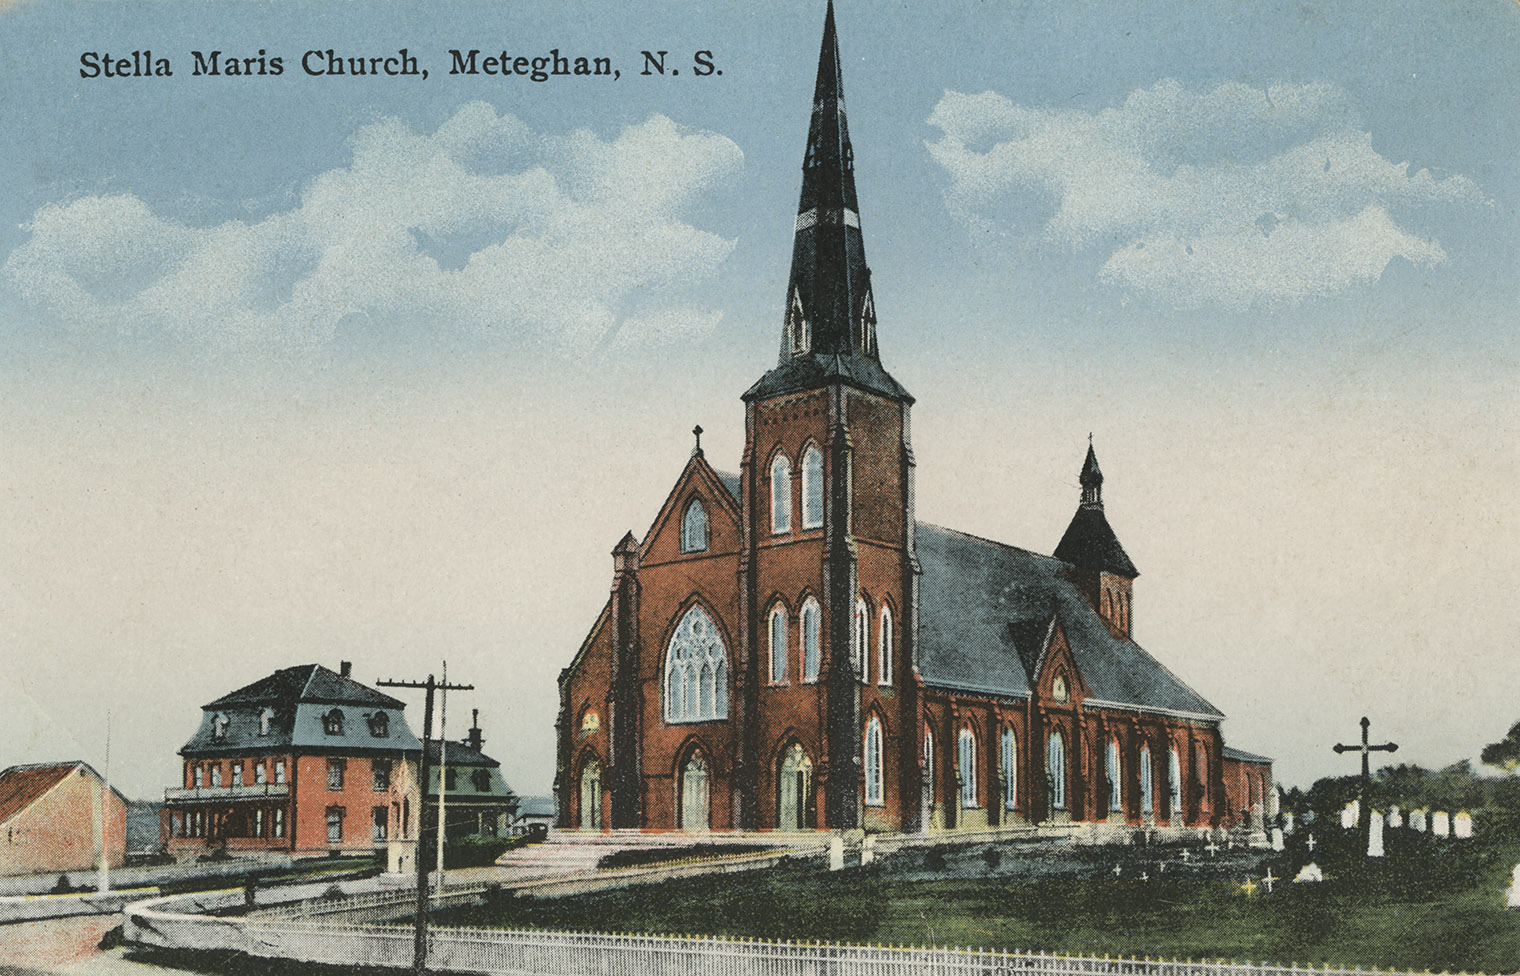 communityalbums - Stella Maris church, Meteghan